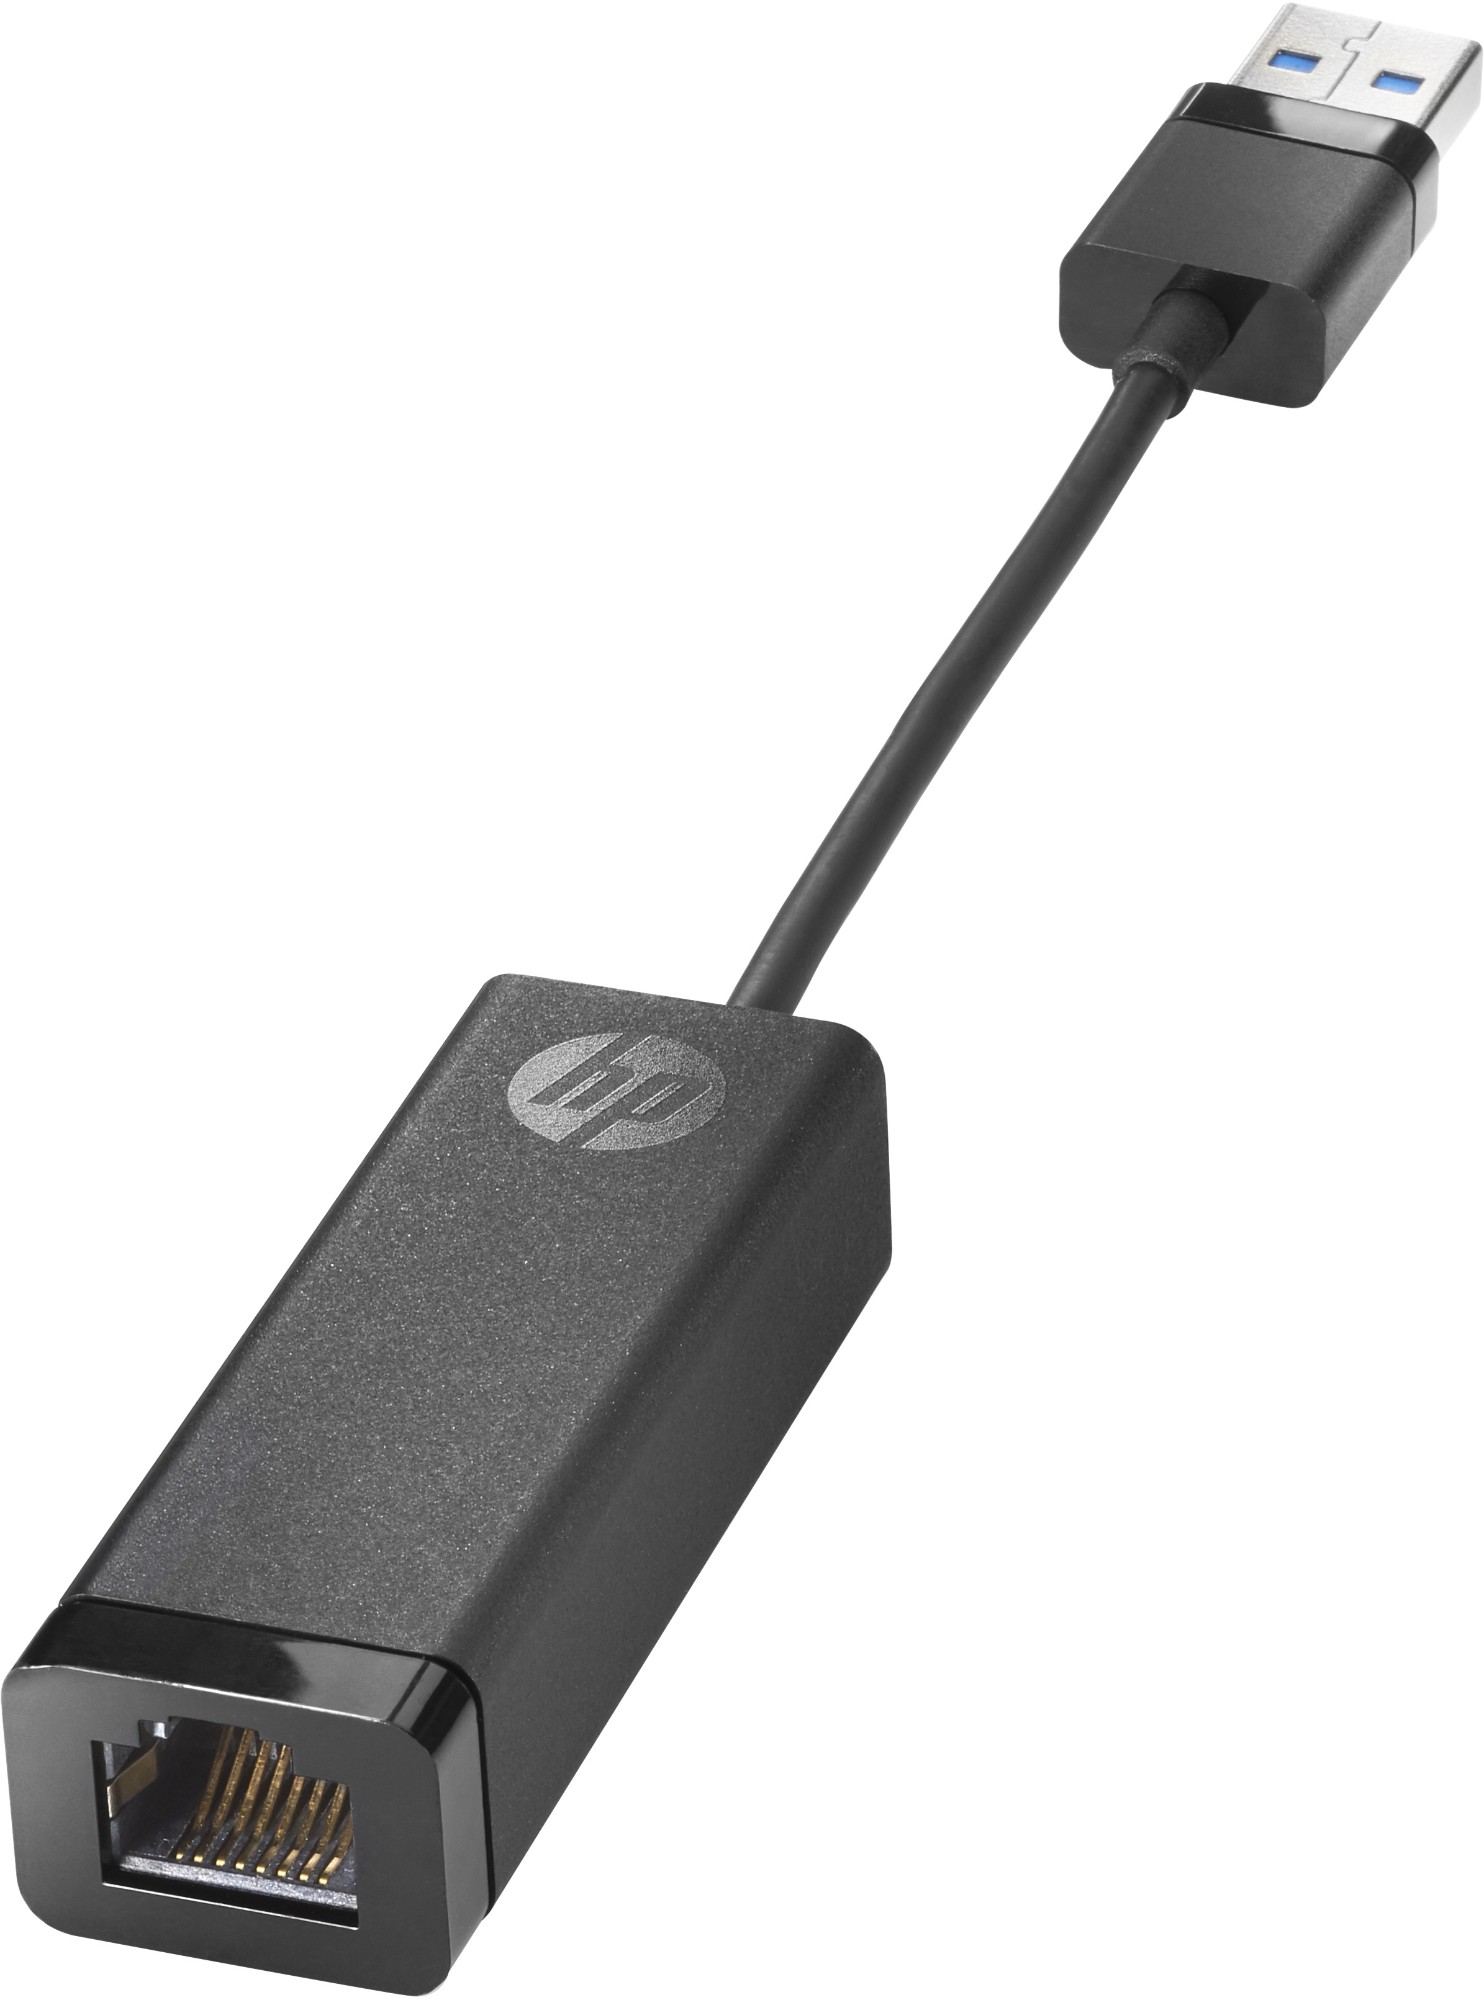 Photos - Cable (video, audio, USB) HP USB 3.0 to Gigabit LAN Adapter N7P47AA#AC3 